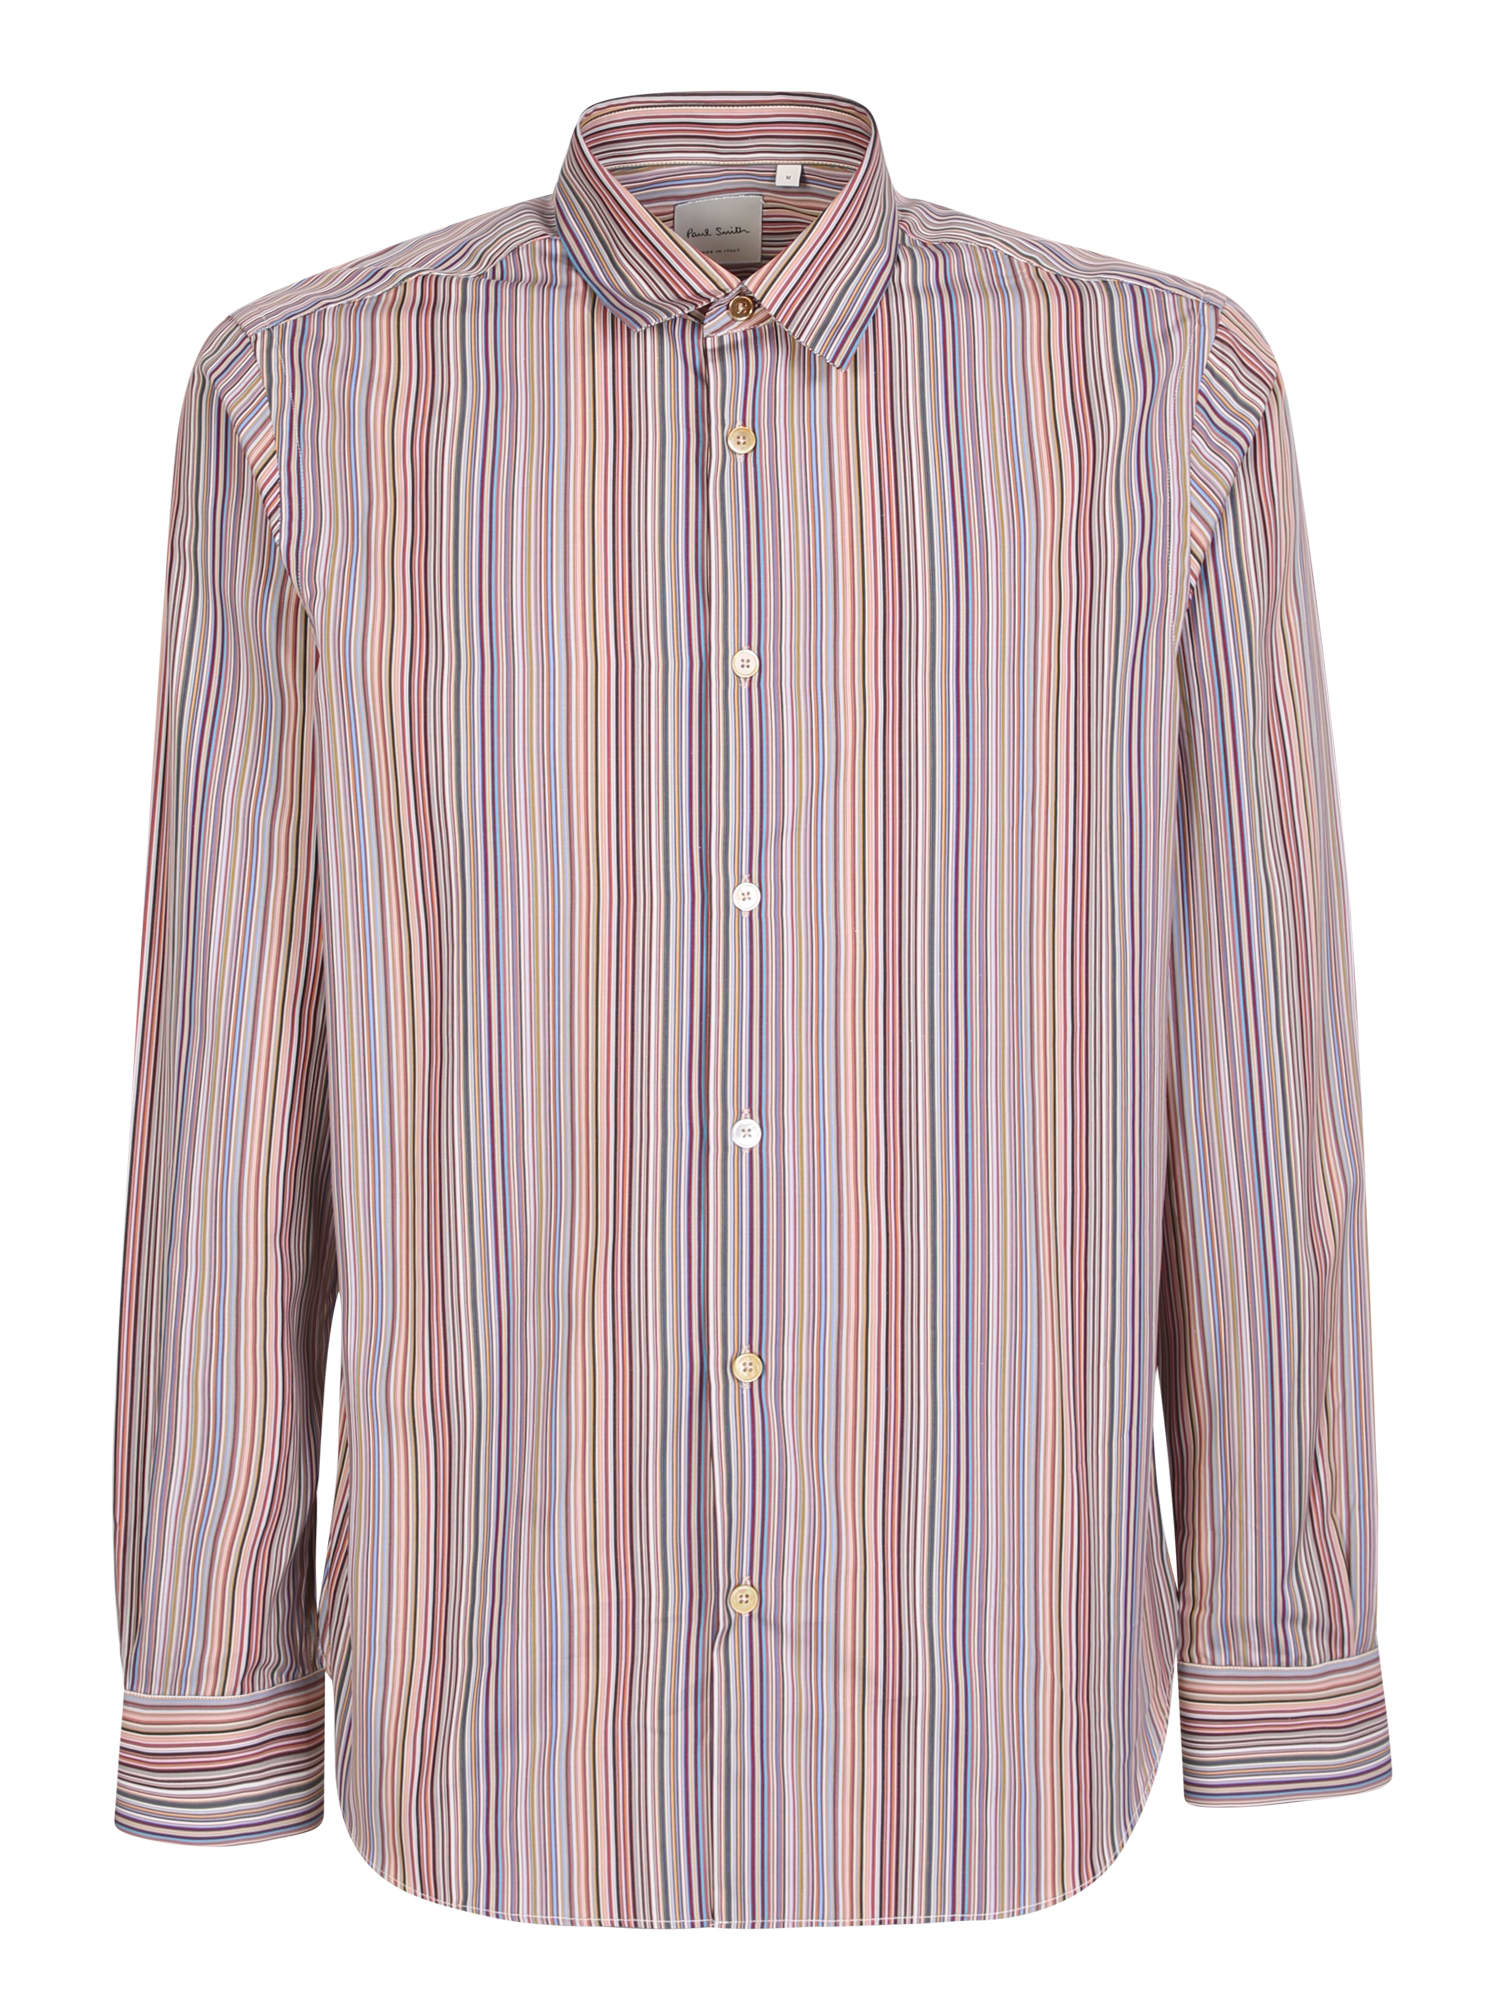 Paul Smith Striped Cotton Shirt